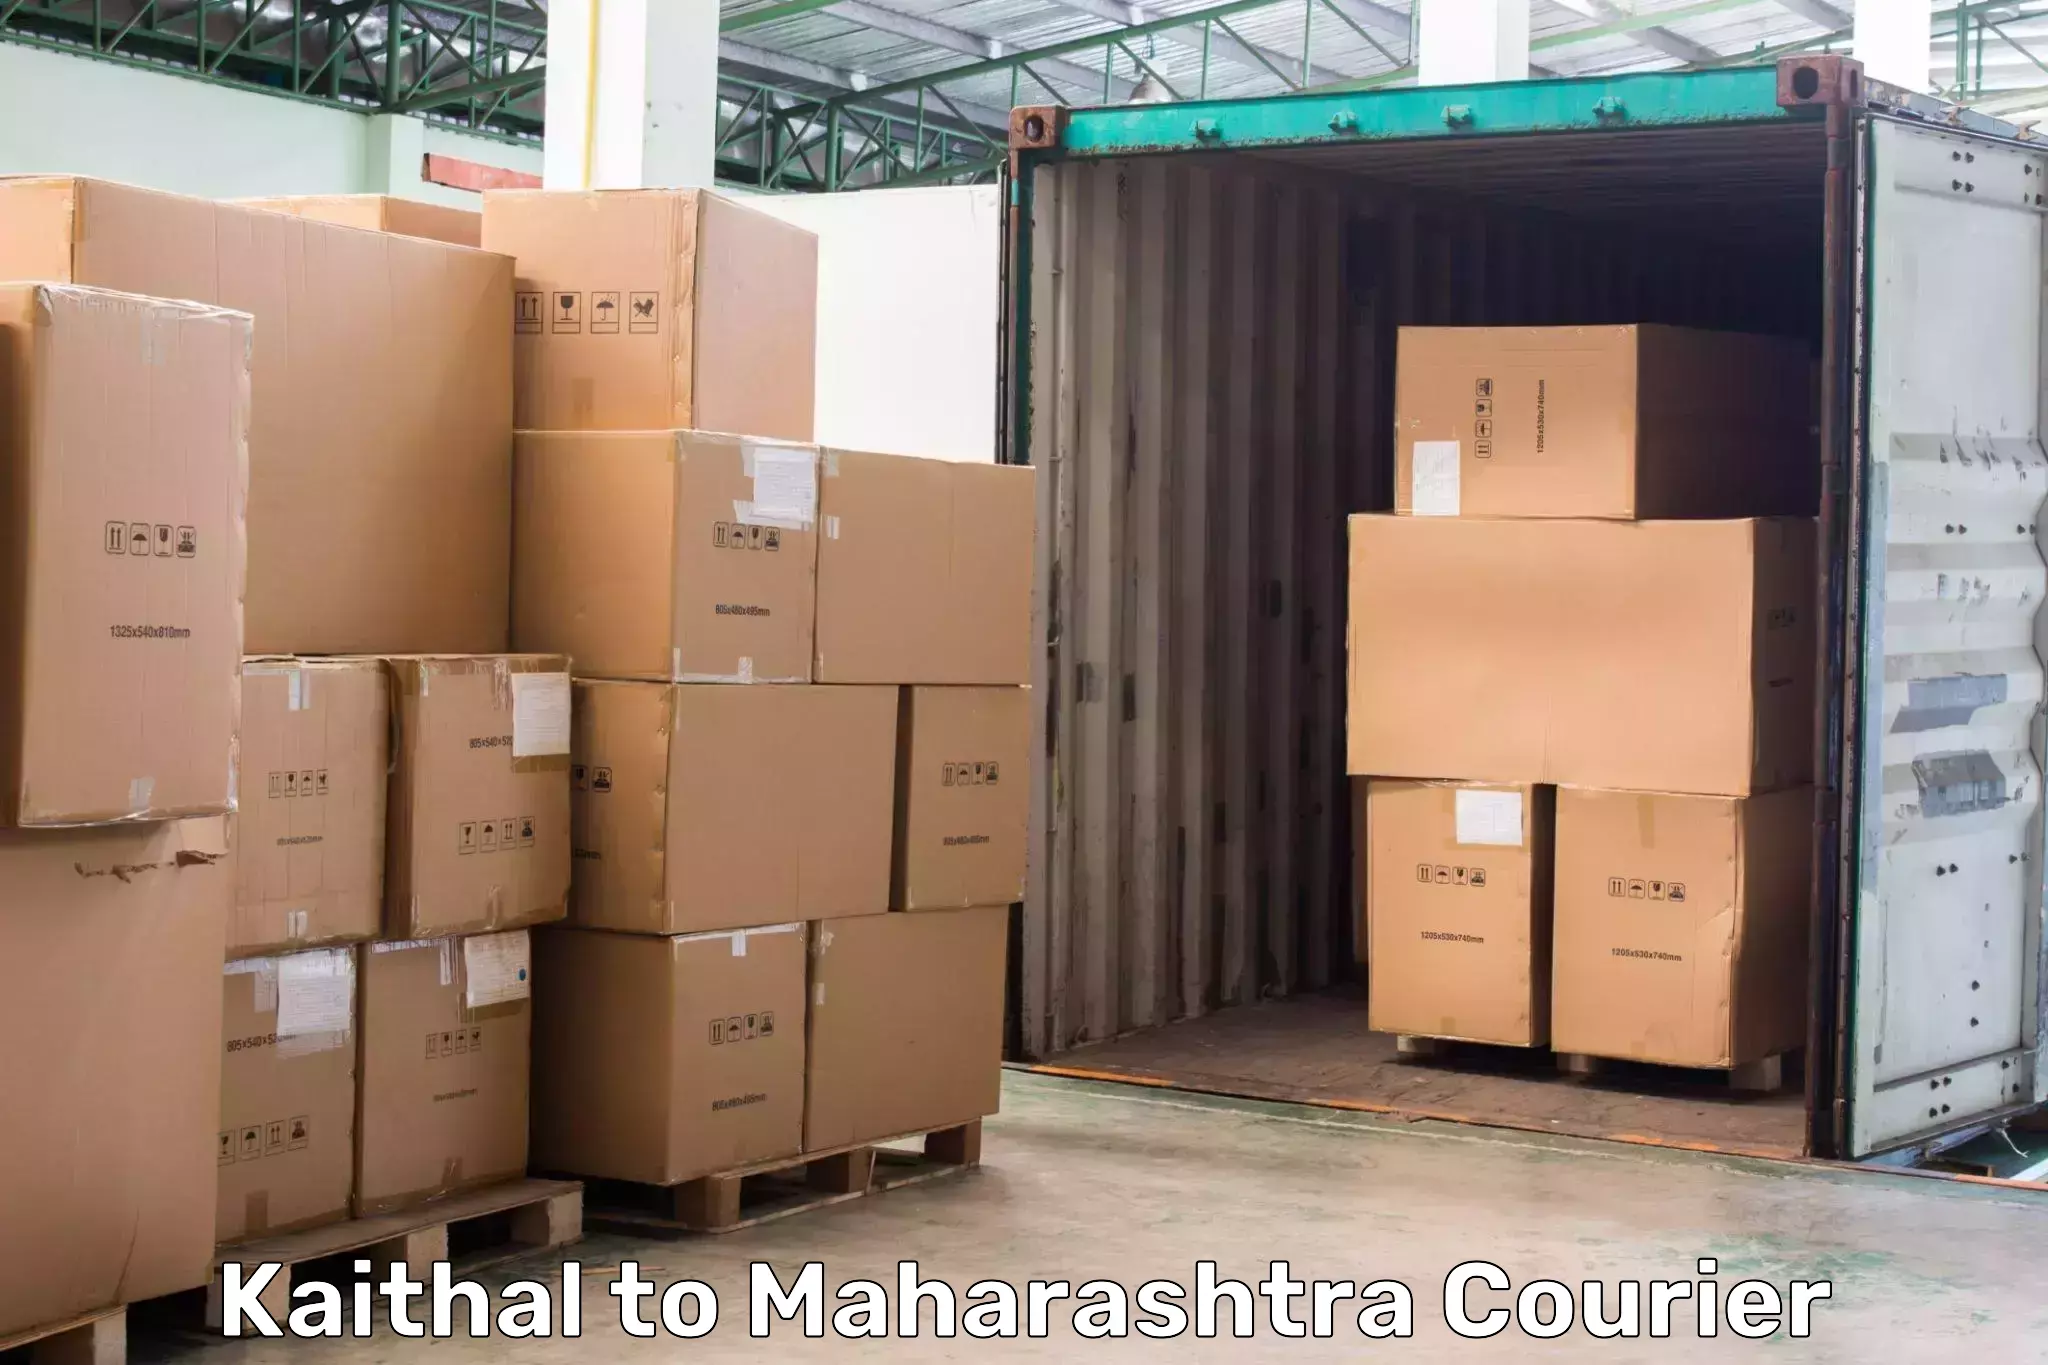 User-friendly courier app Kaithal to Maharashtra